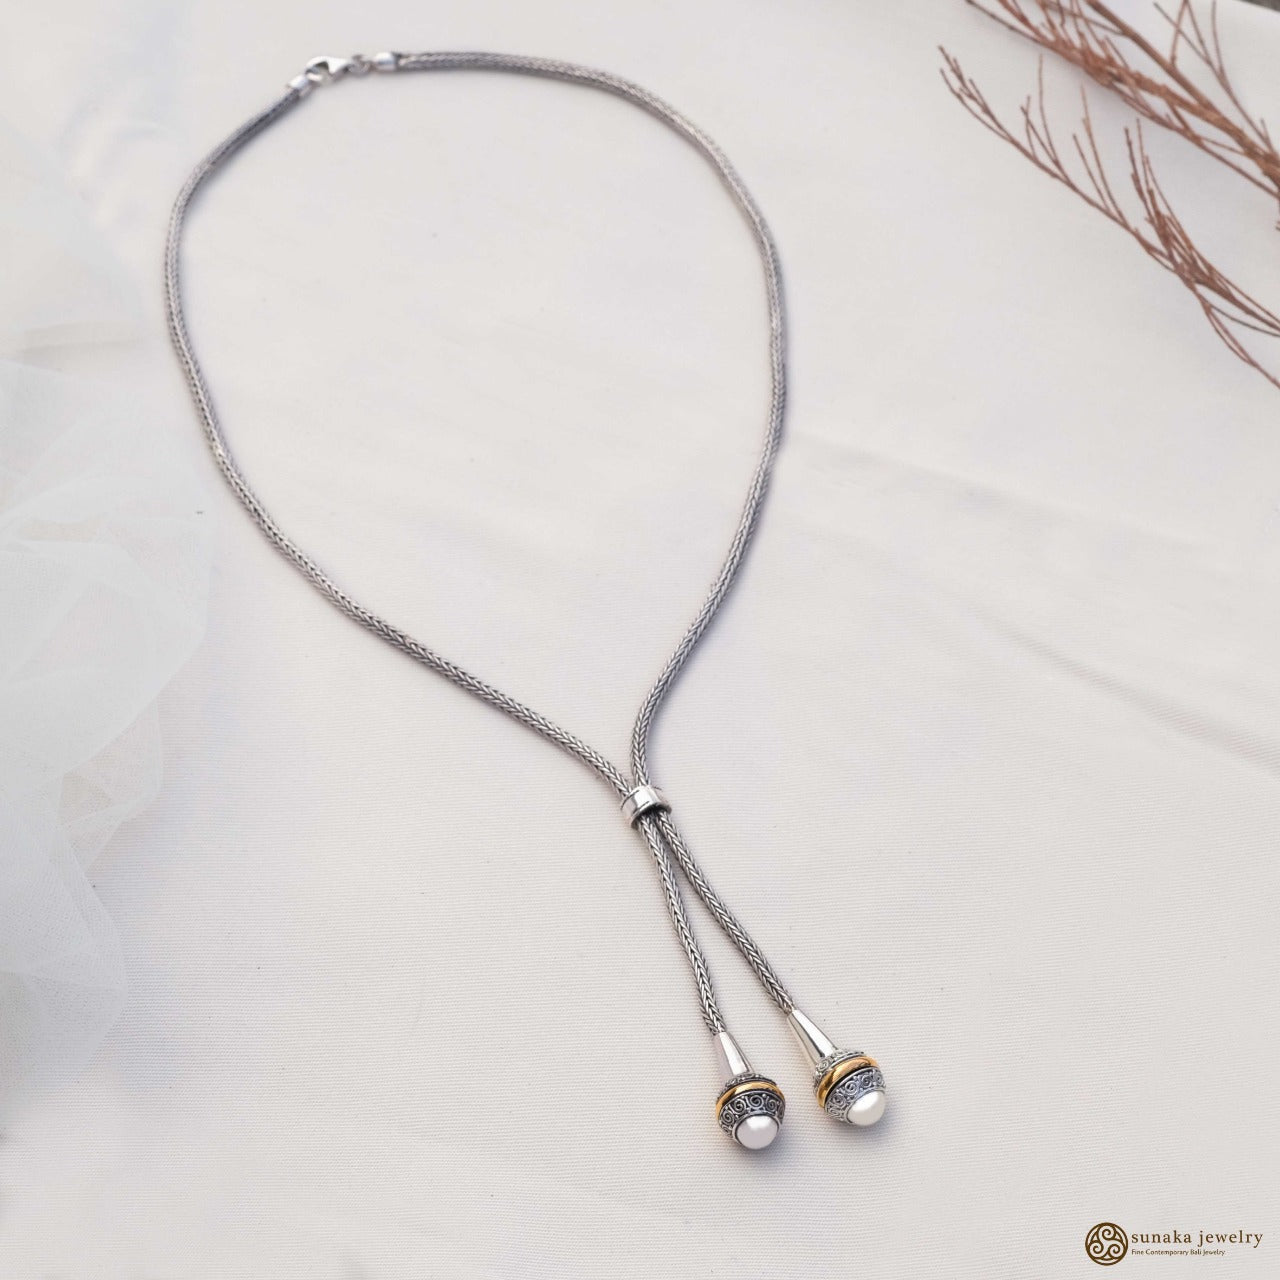 Emas Perak with Bun Jawan Ornamentation Lariat Necklace